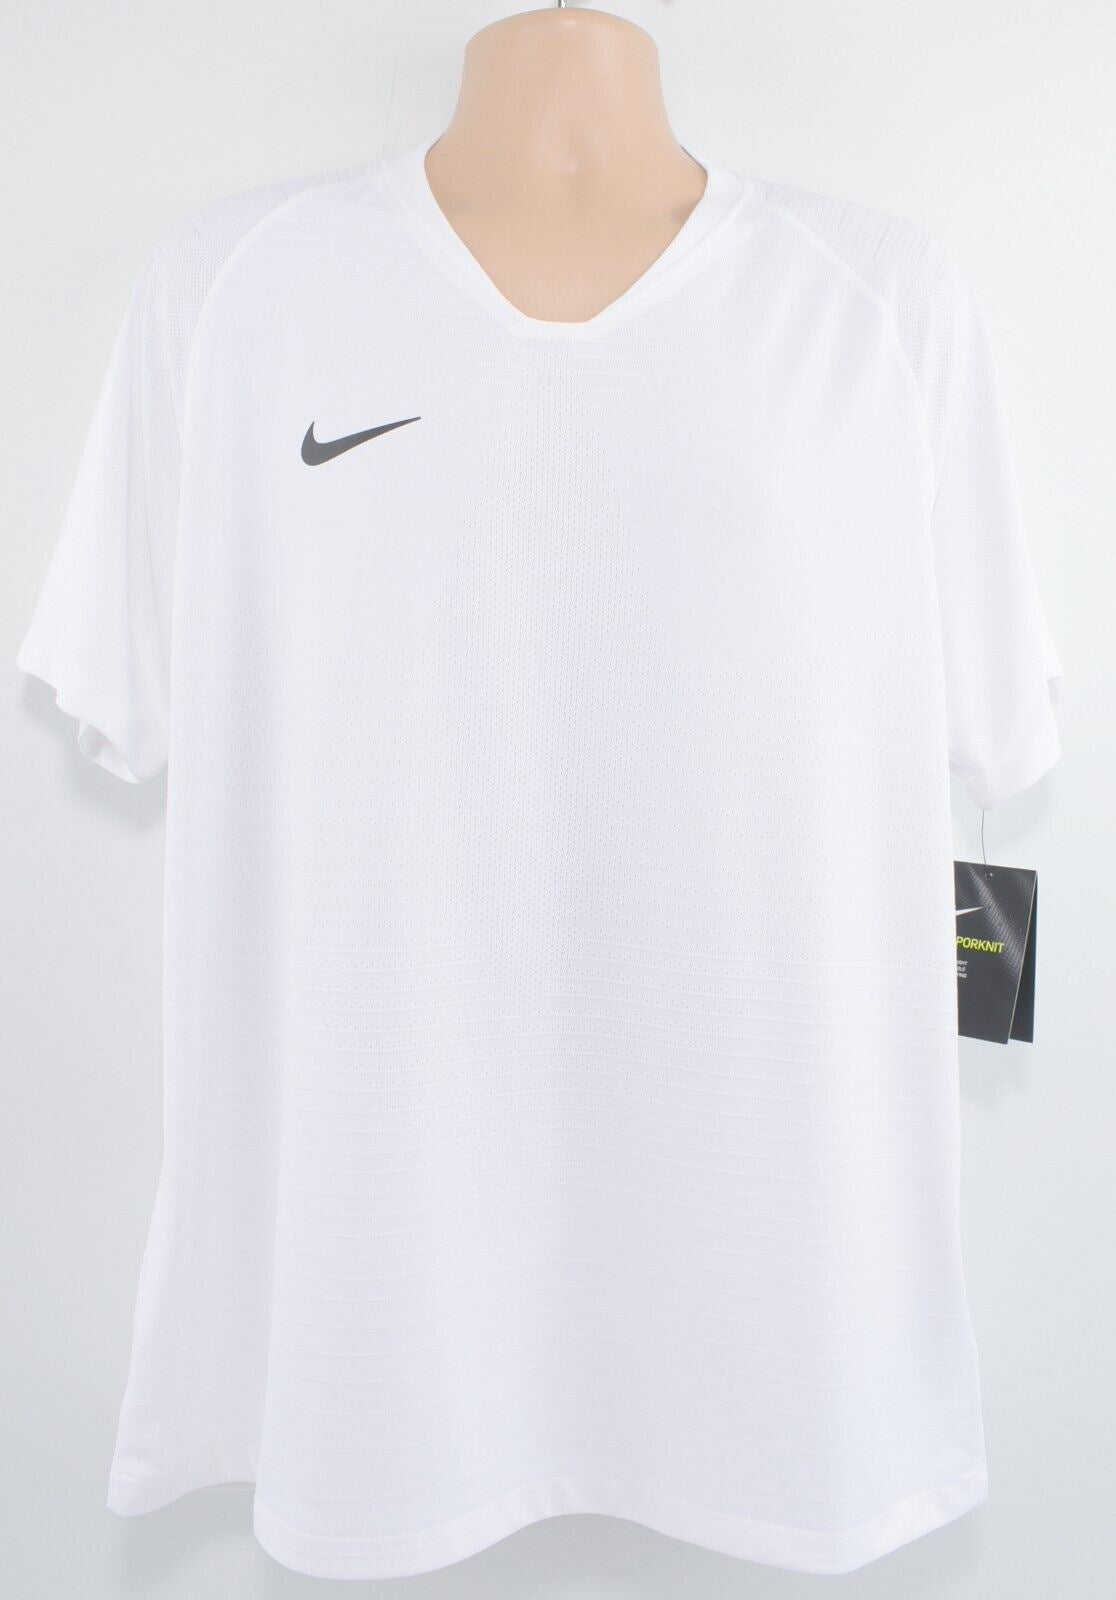 NIKE Men's VAPORKNIT Football Soccer Jersey T-shirt, White, size XL